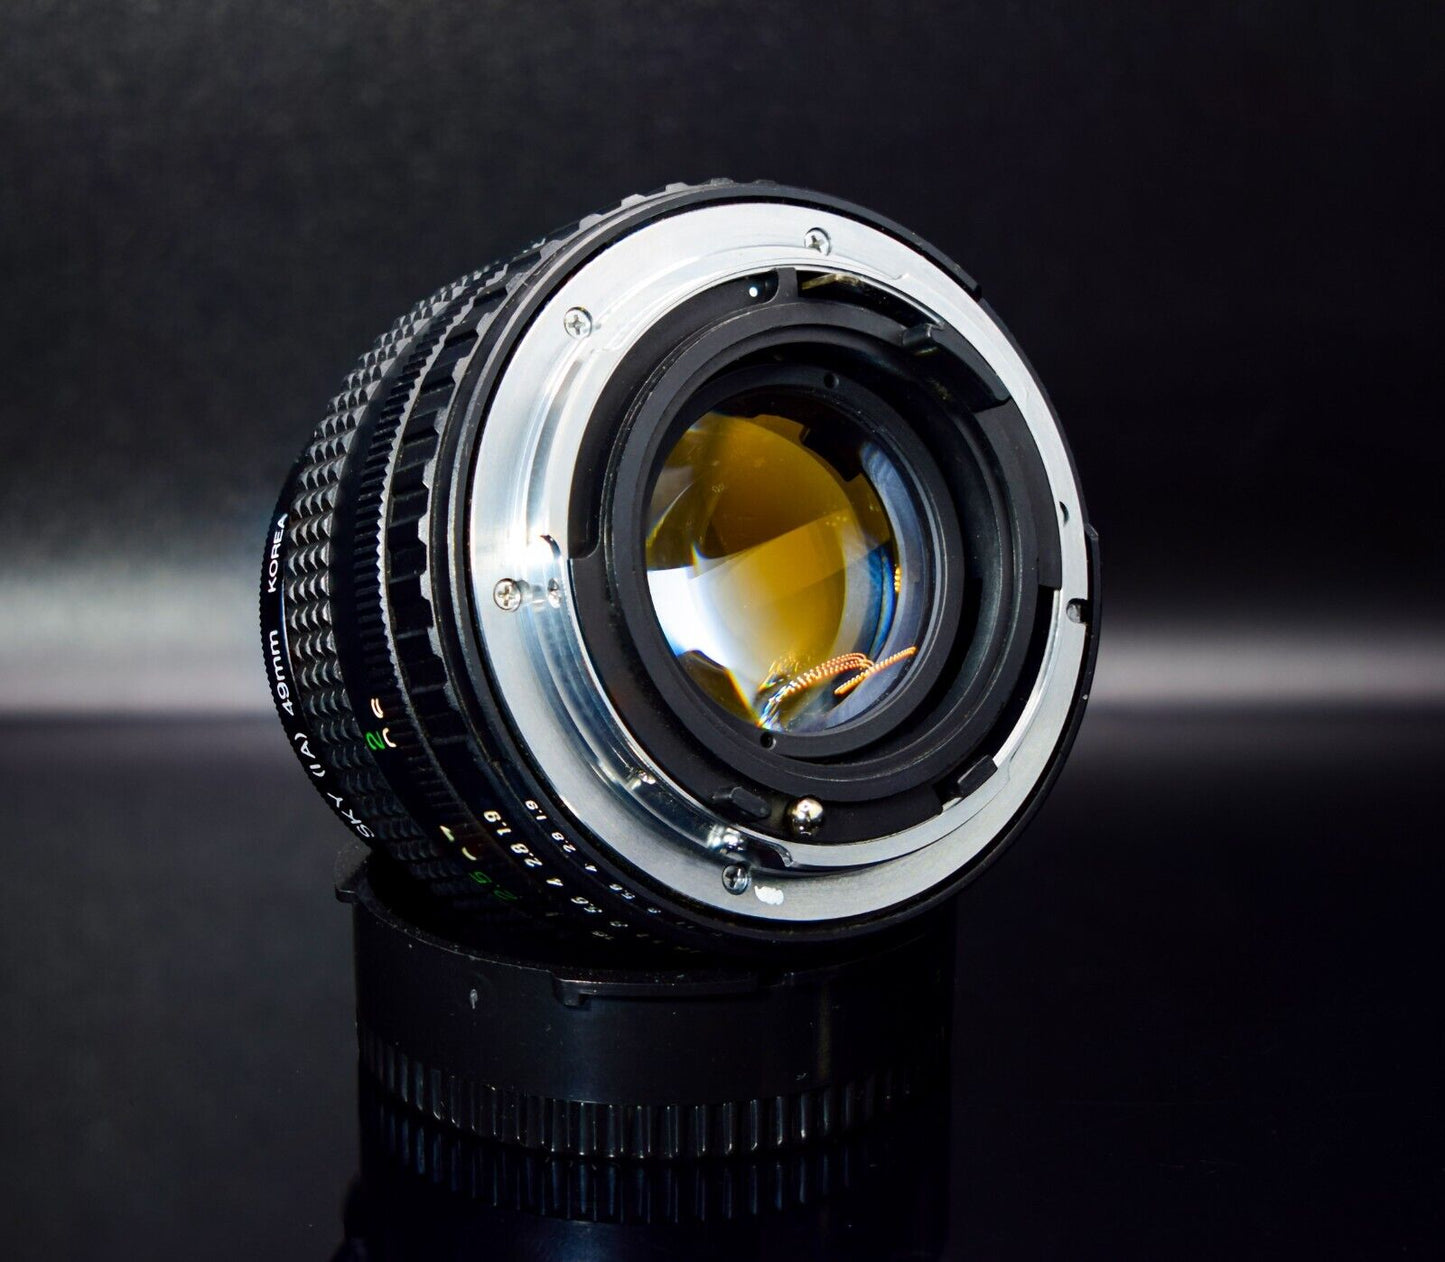 Fujica STX-1 35mm Vintage SLR Camera with Fuji X-Fujinon f/1.9 50mm Lens & Filter